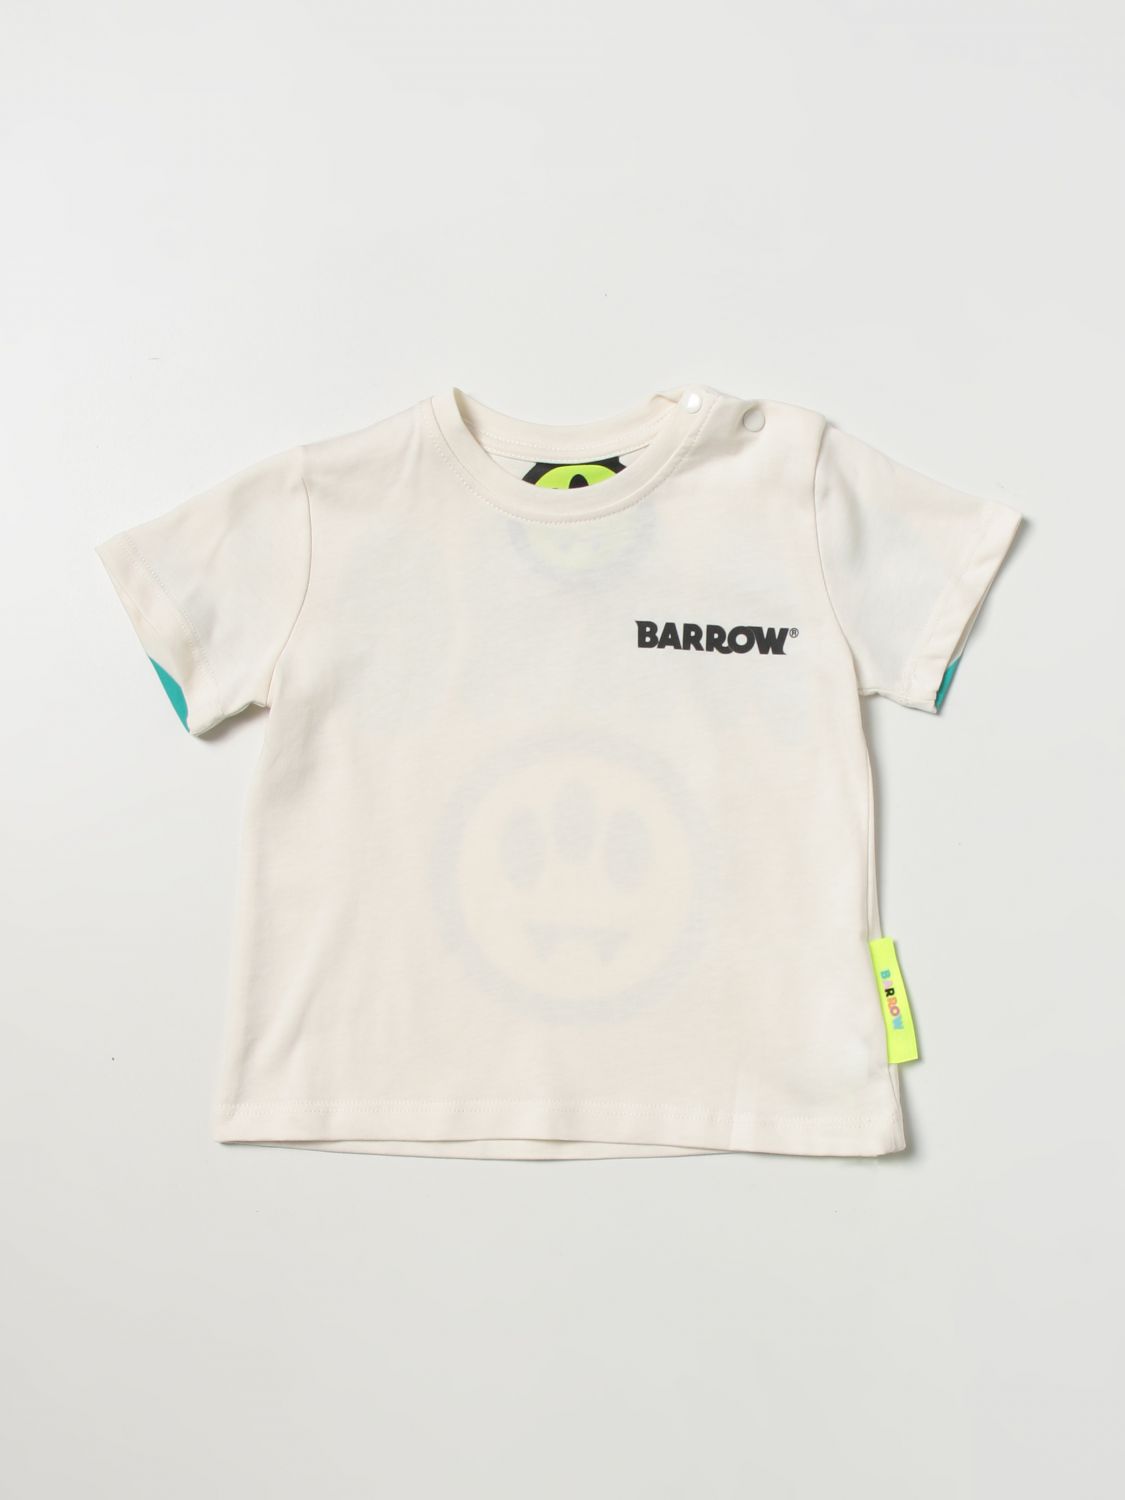 Barrow Babies' T-shirt  Kids Kids In Yellow Cream